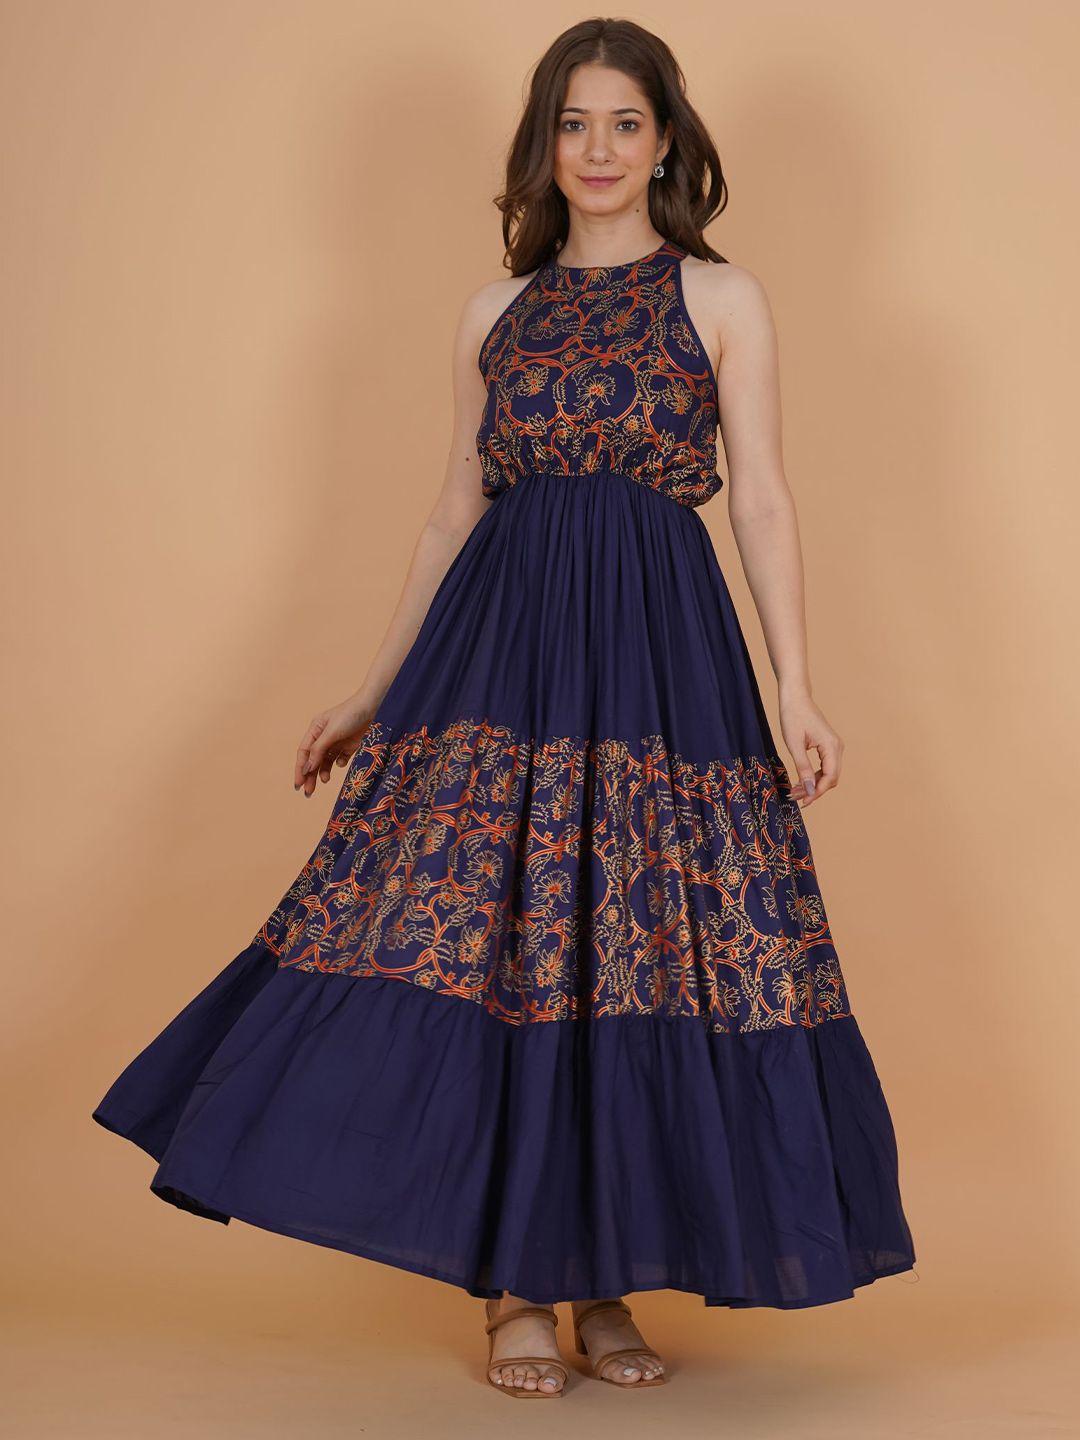 purshottam-wala-women-blue-ethnic-motifs-halter-neck-maxi-dress